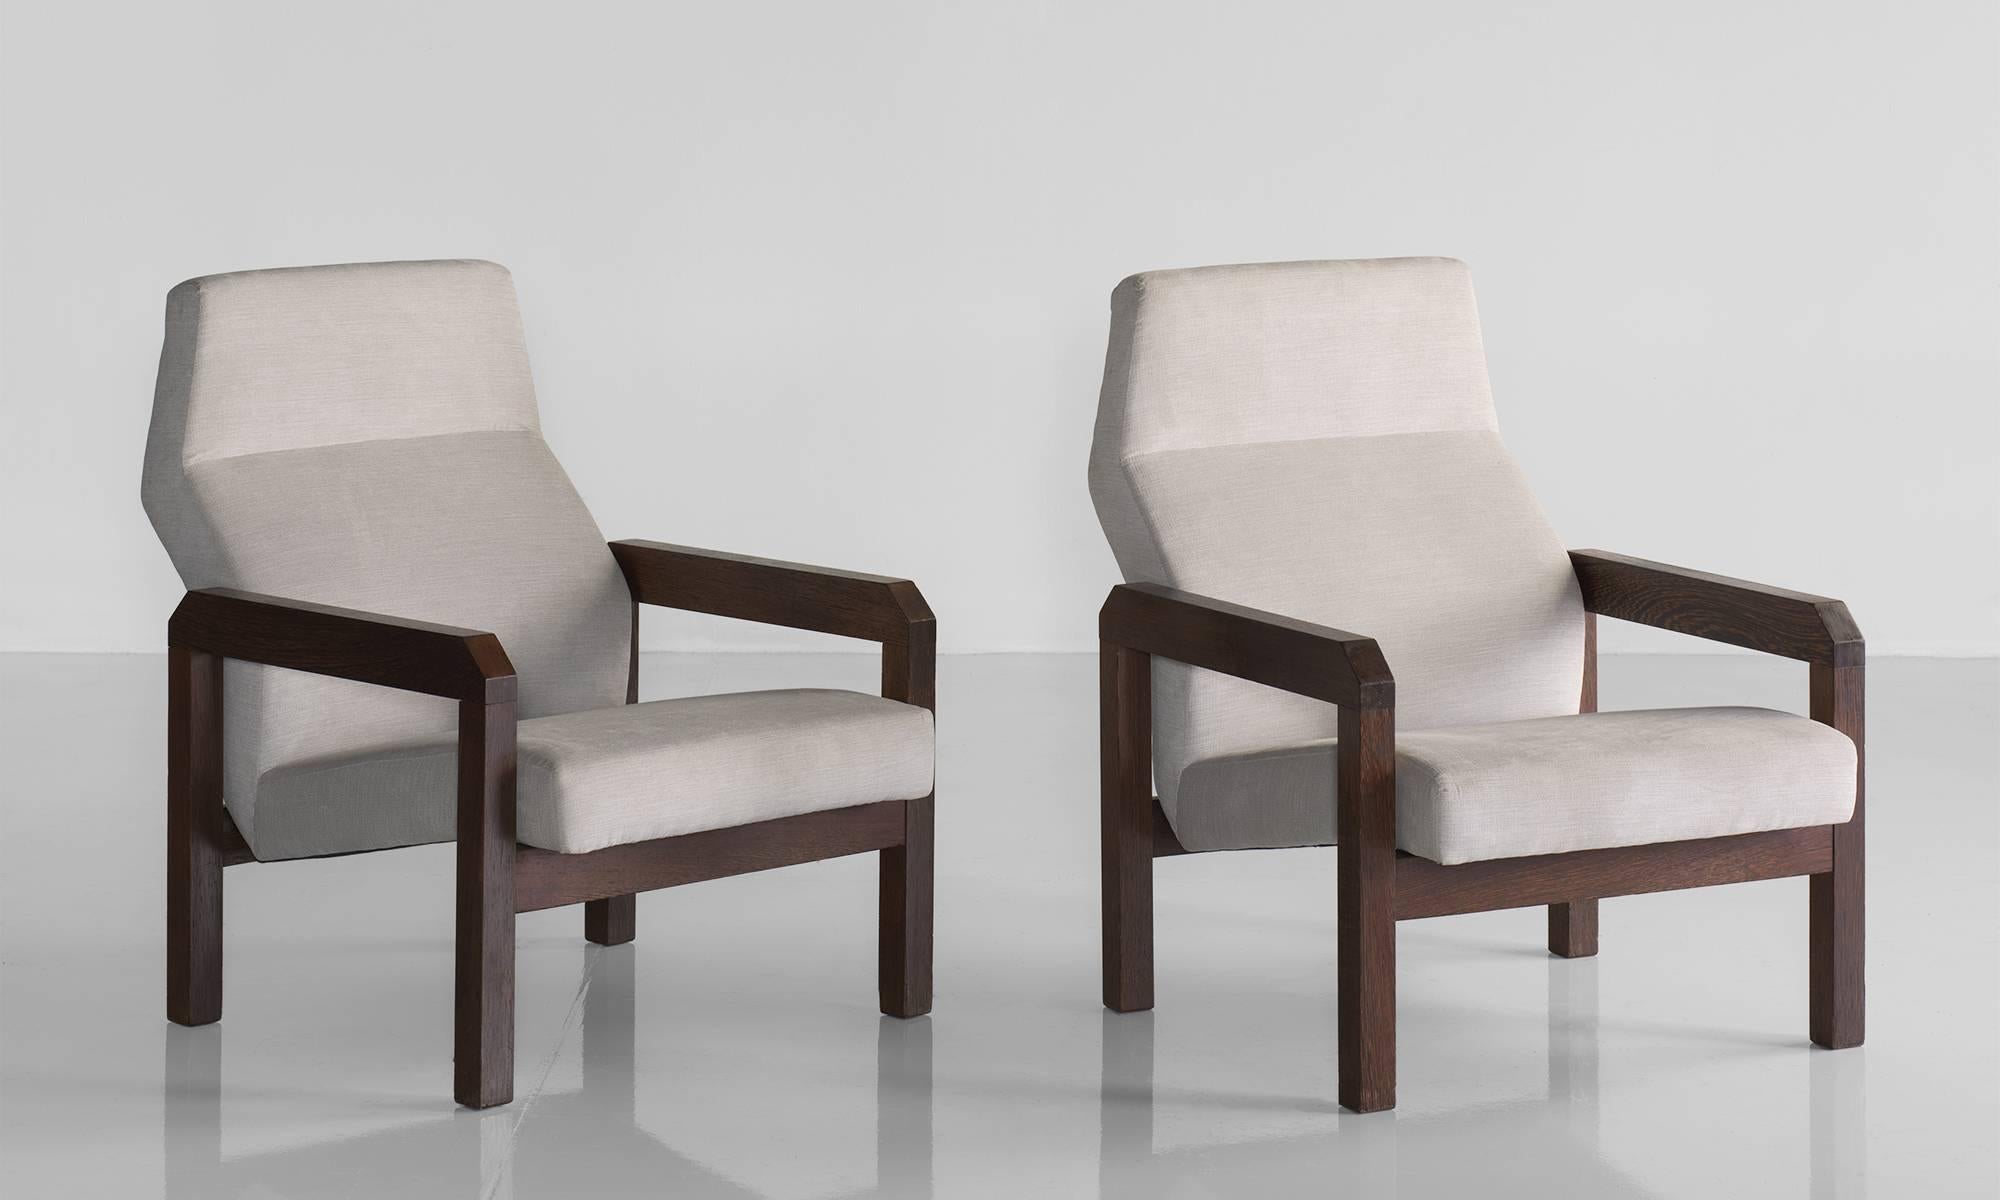 Elegant geometric form with original upholstery.